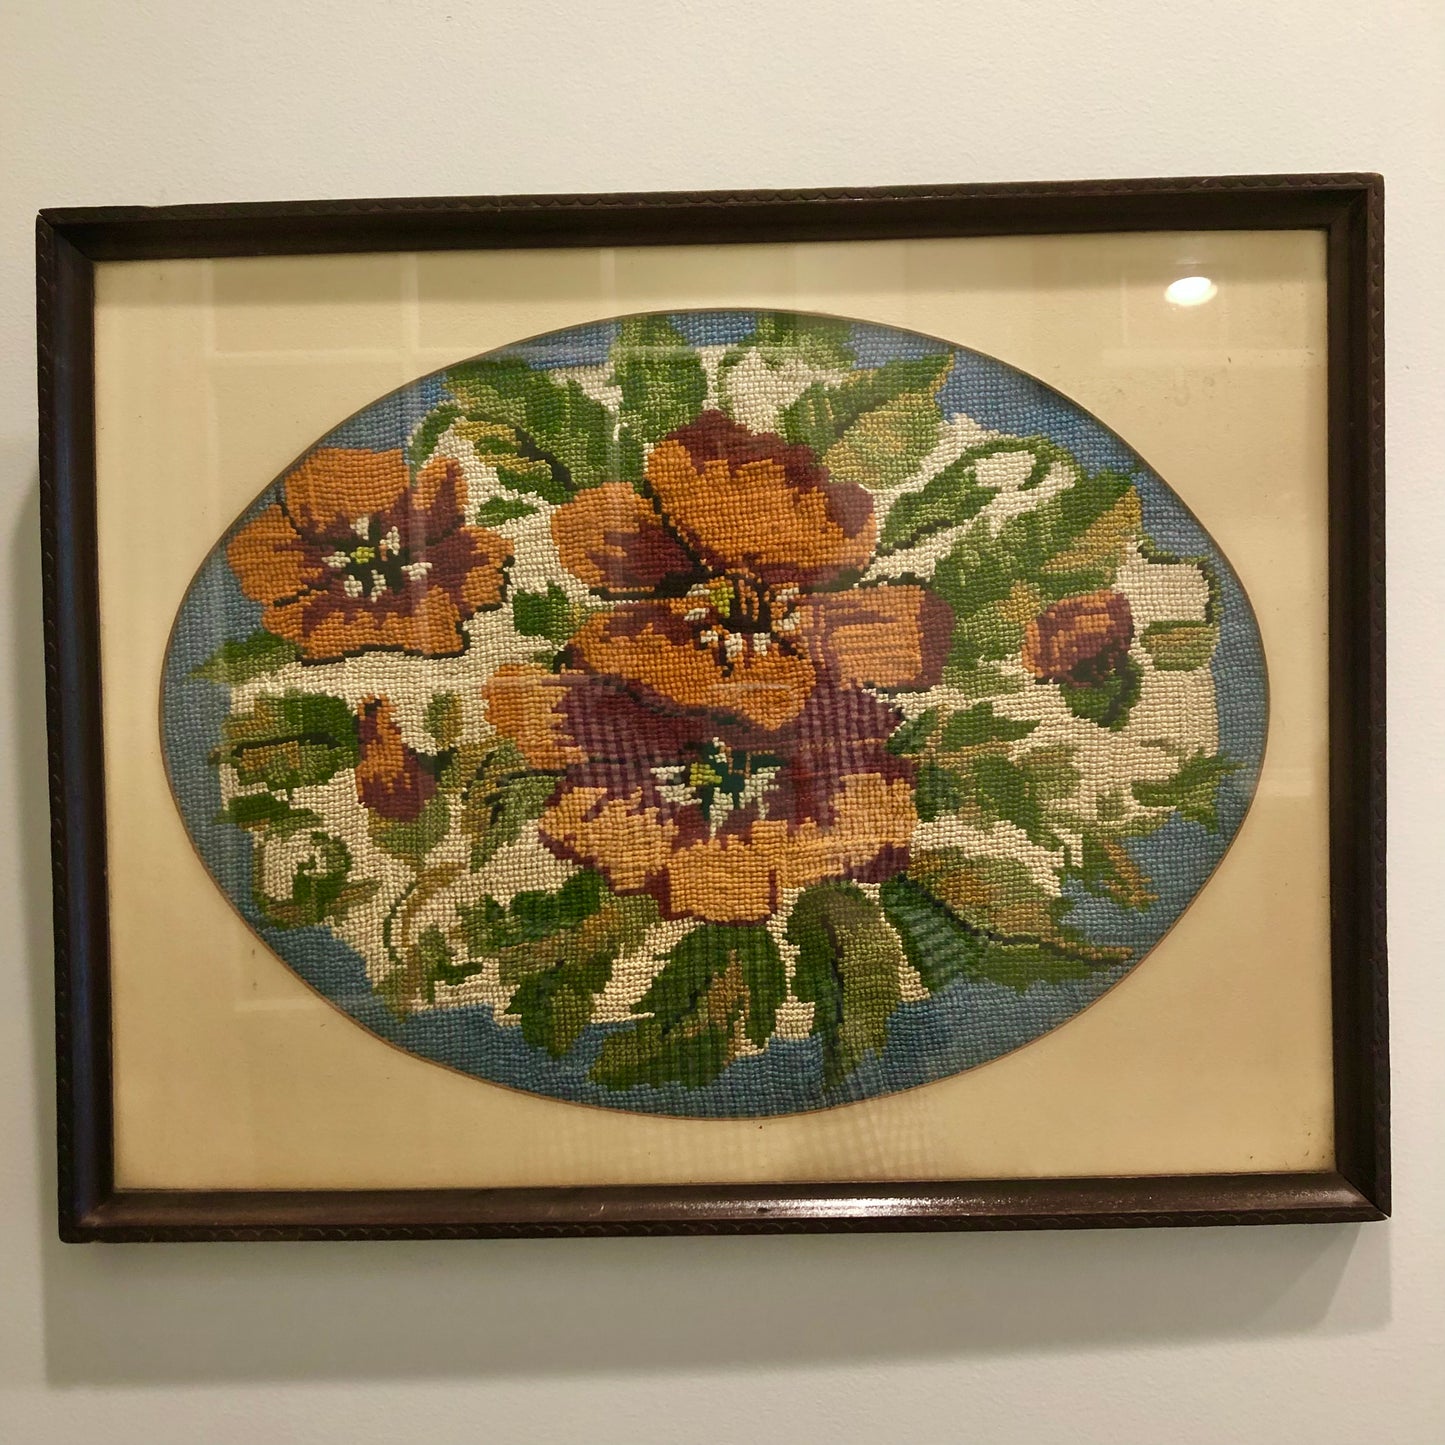 Artwork: Needlepoint Floral, Oval